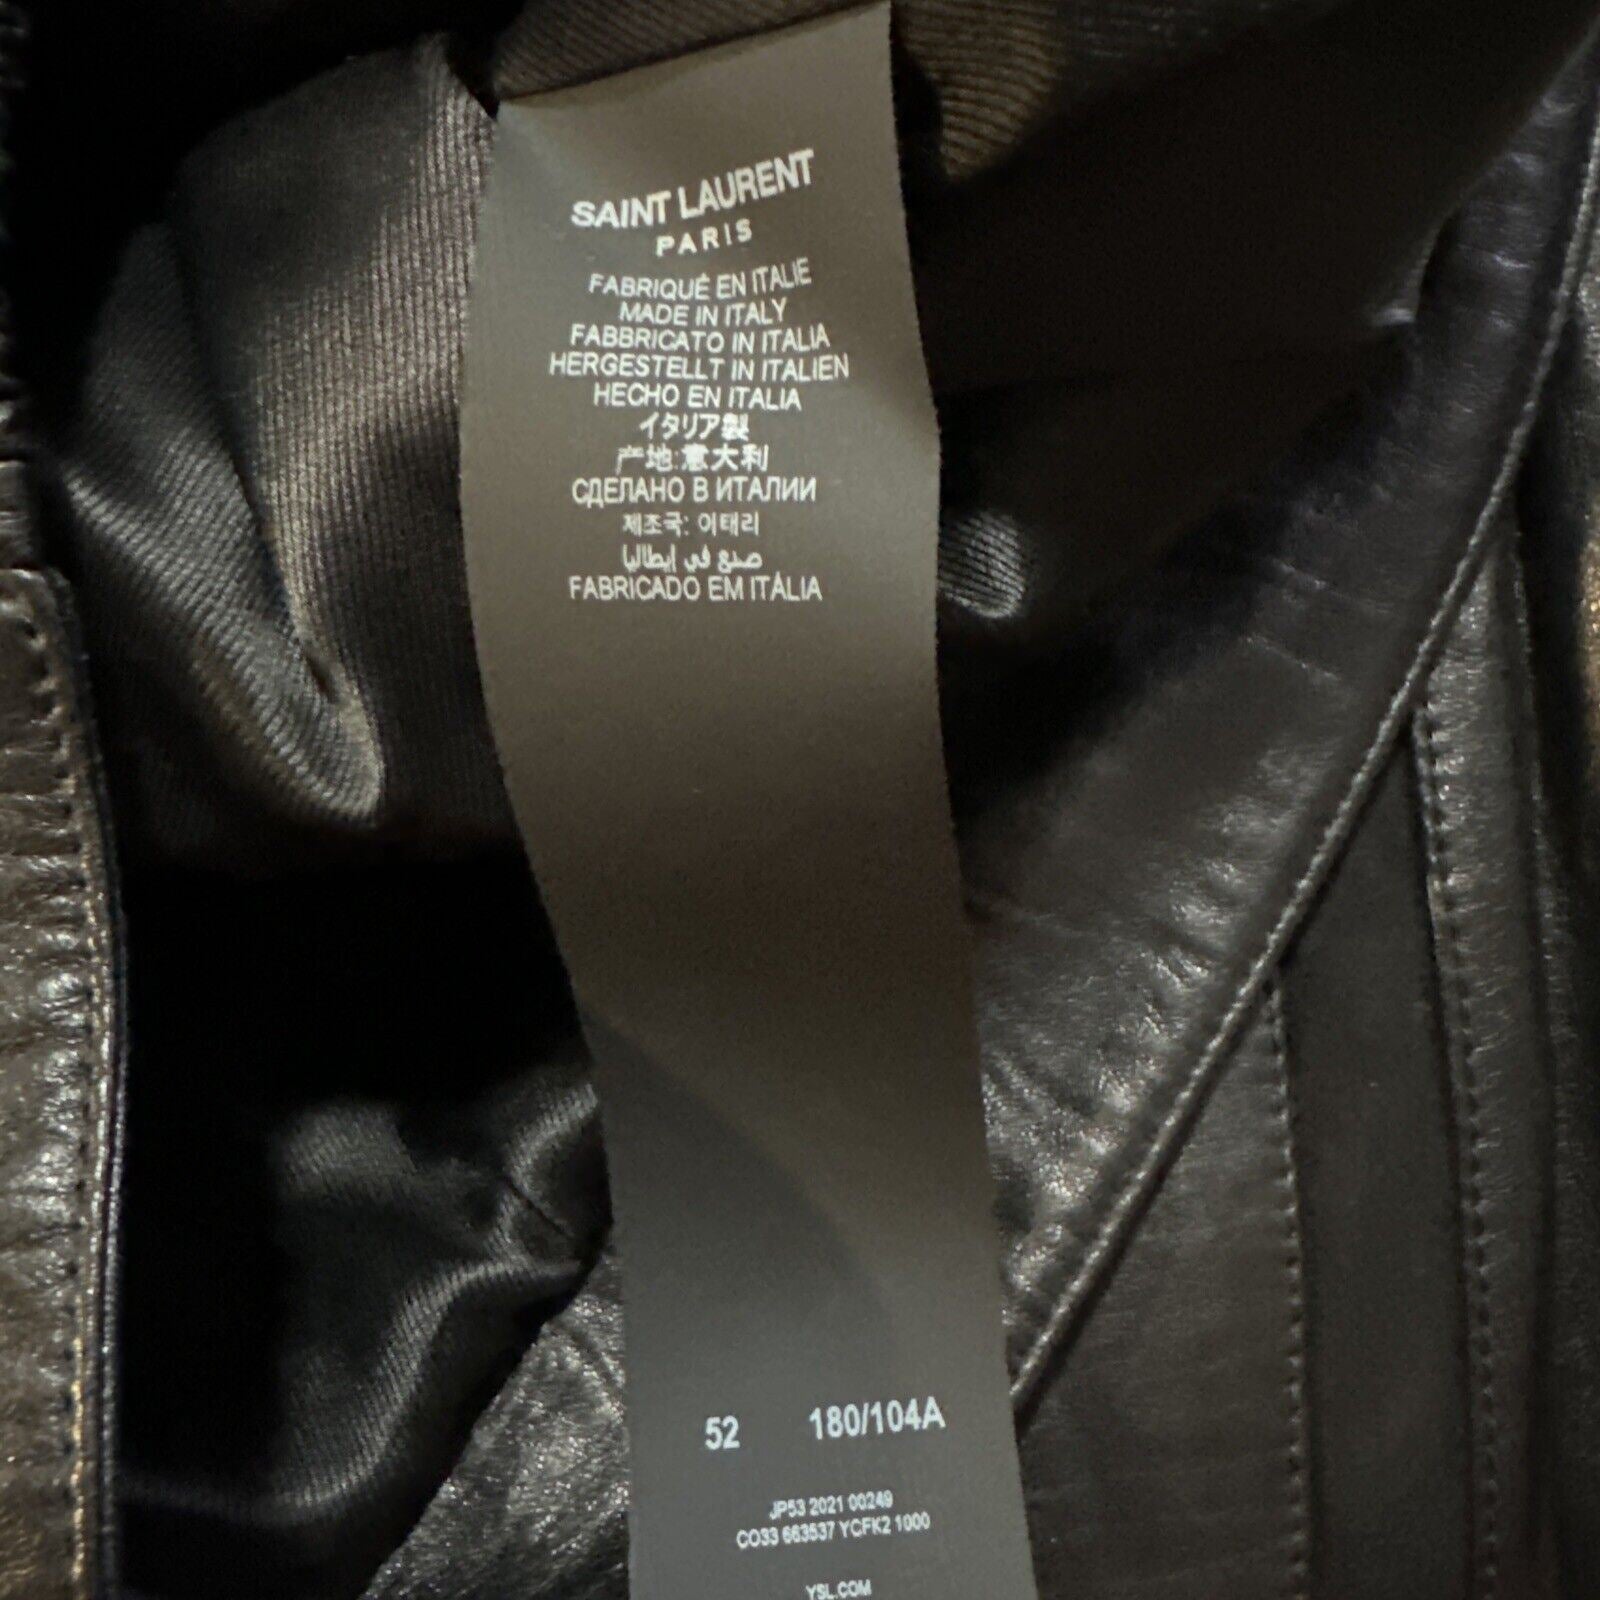 New $5490 Saint Laurent Men’s Leather/Suede Jacket Coat Black 42 US/52 Eu Italy